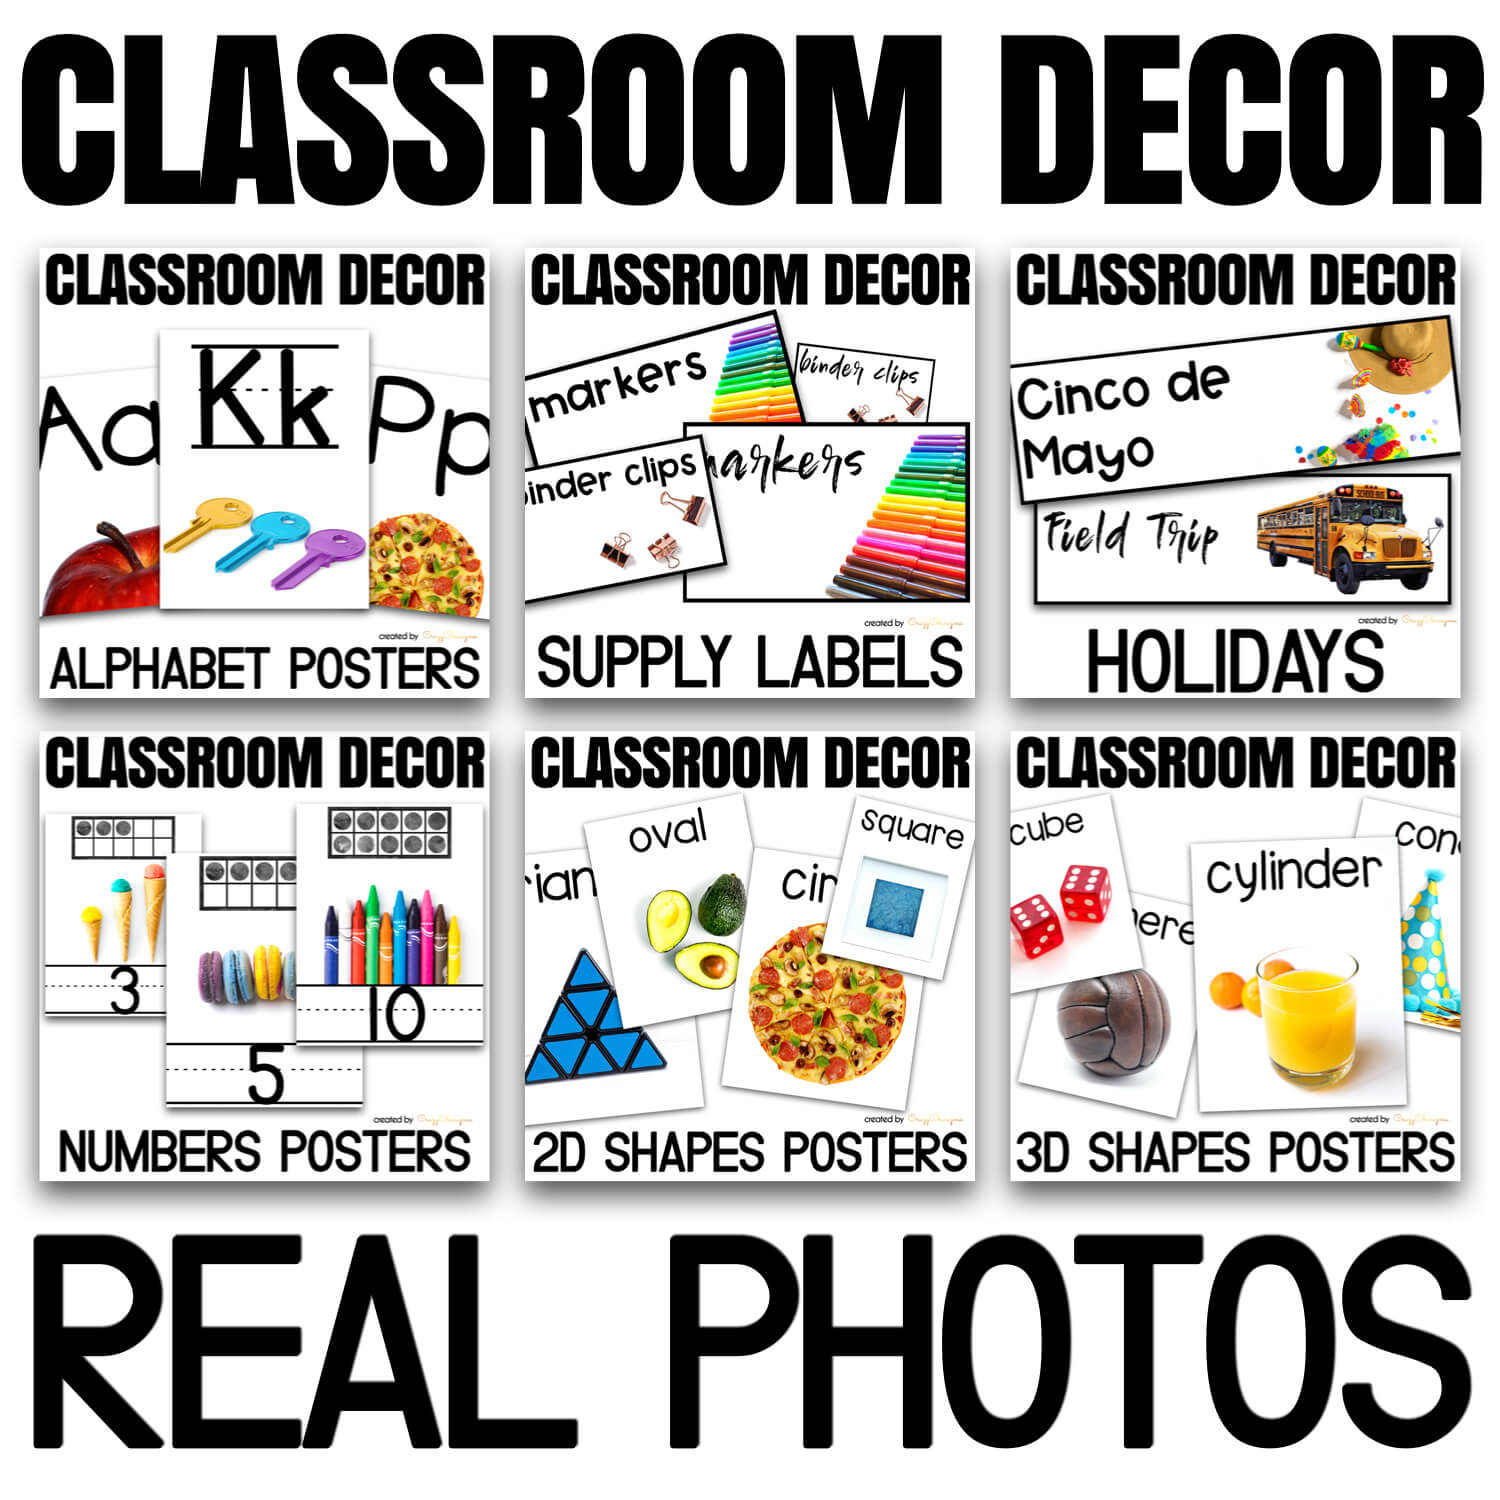 Classroom Decor with Real Photos